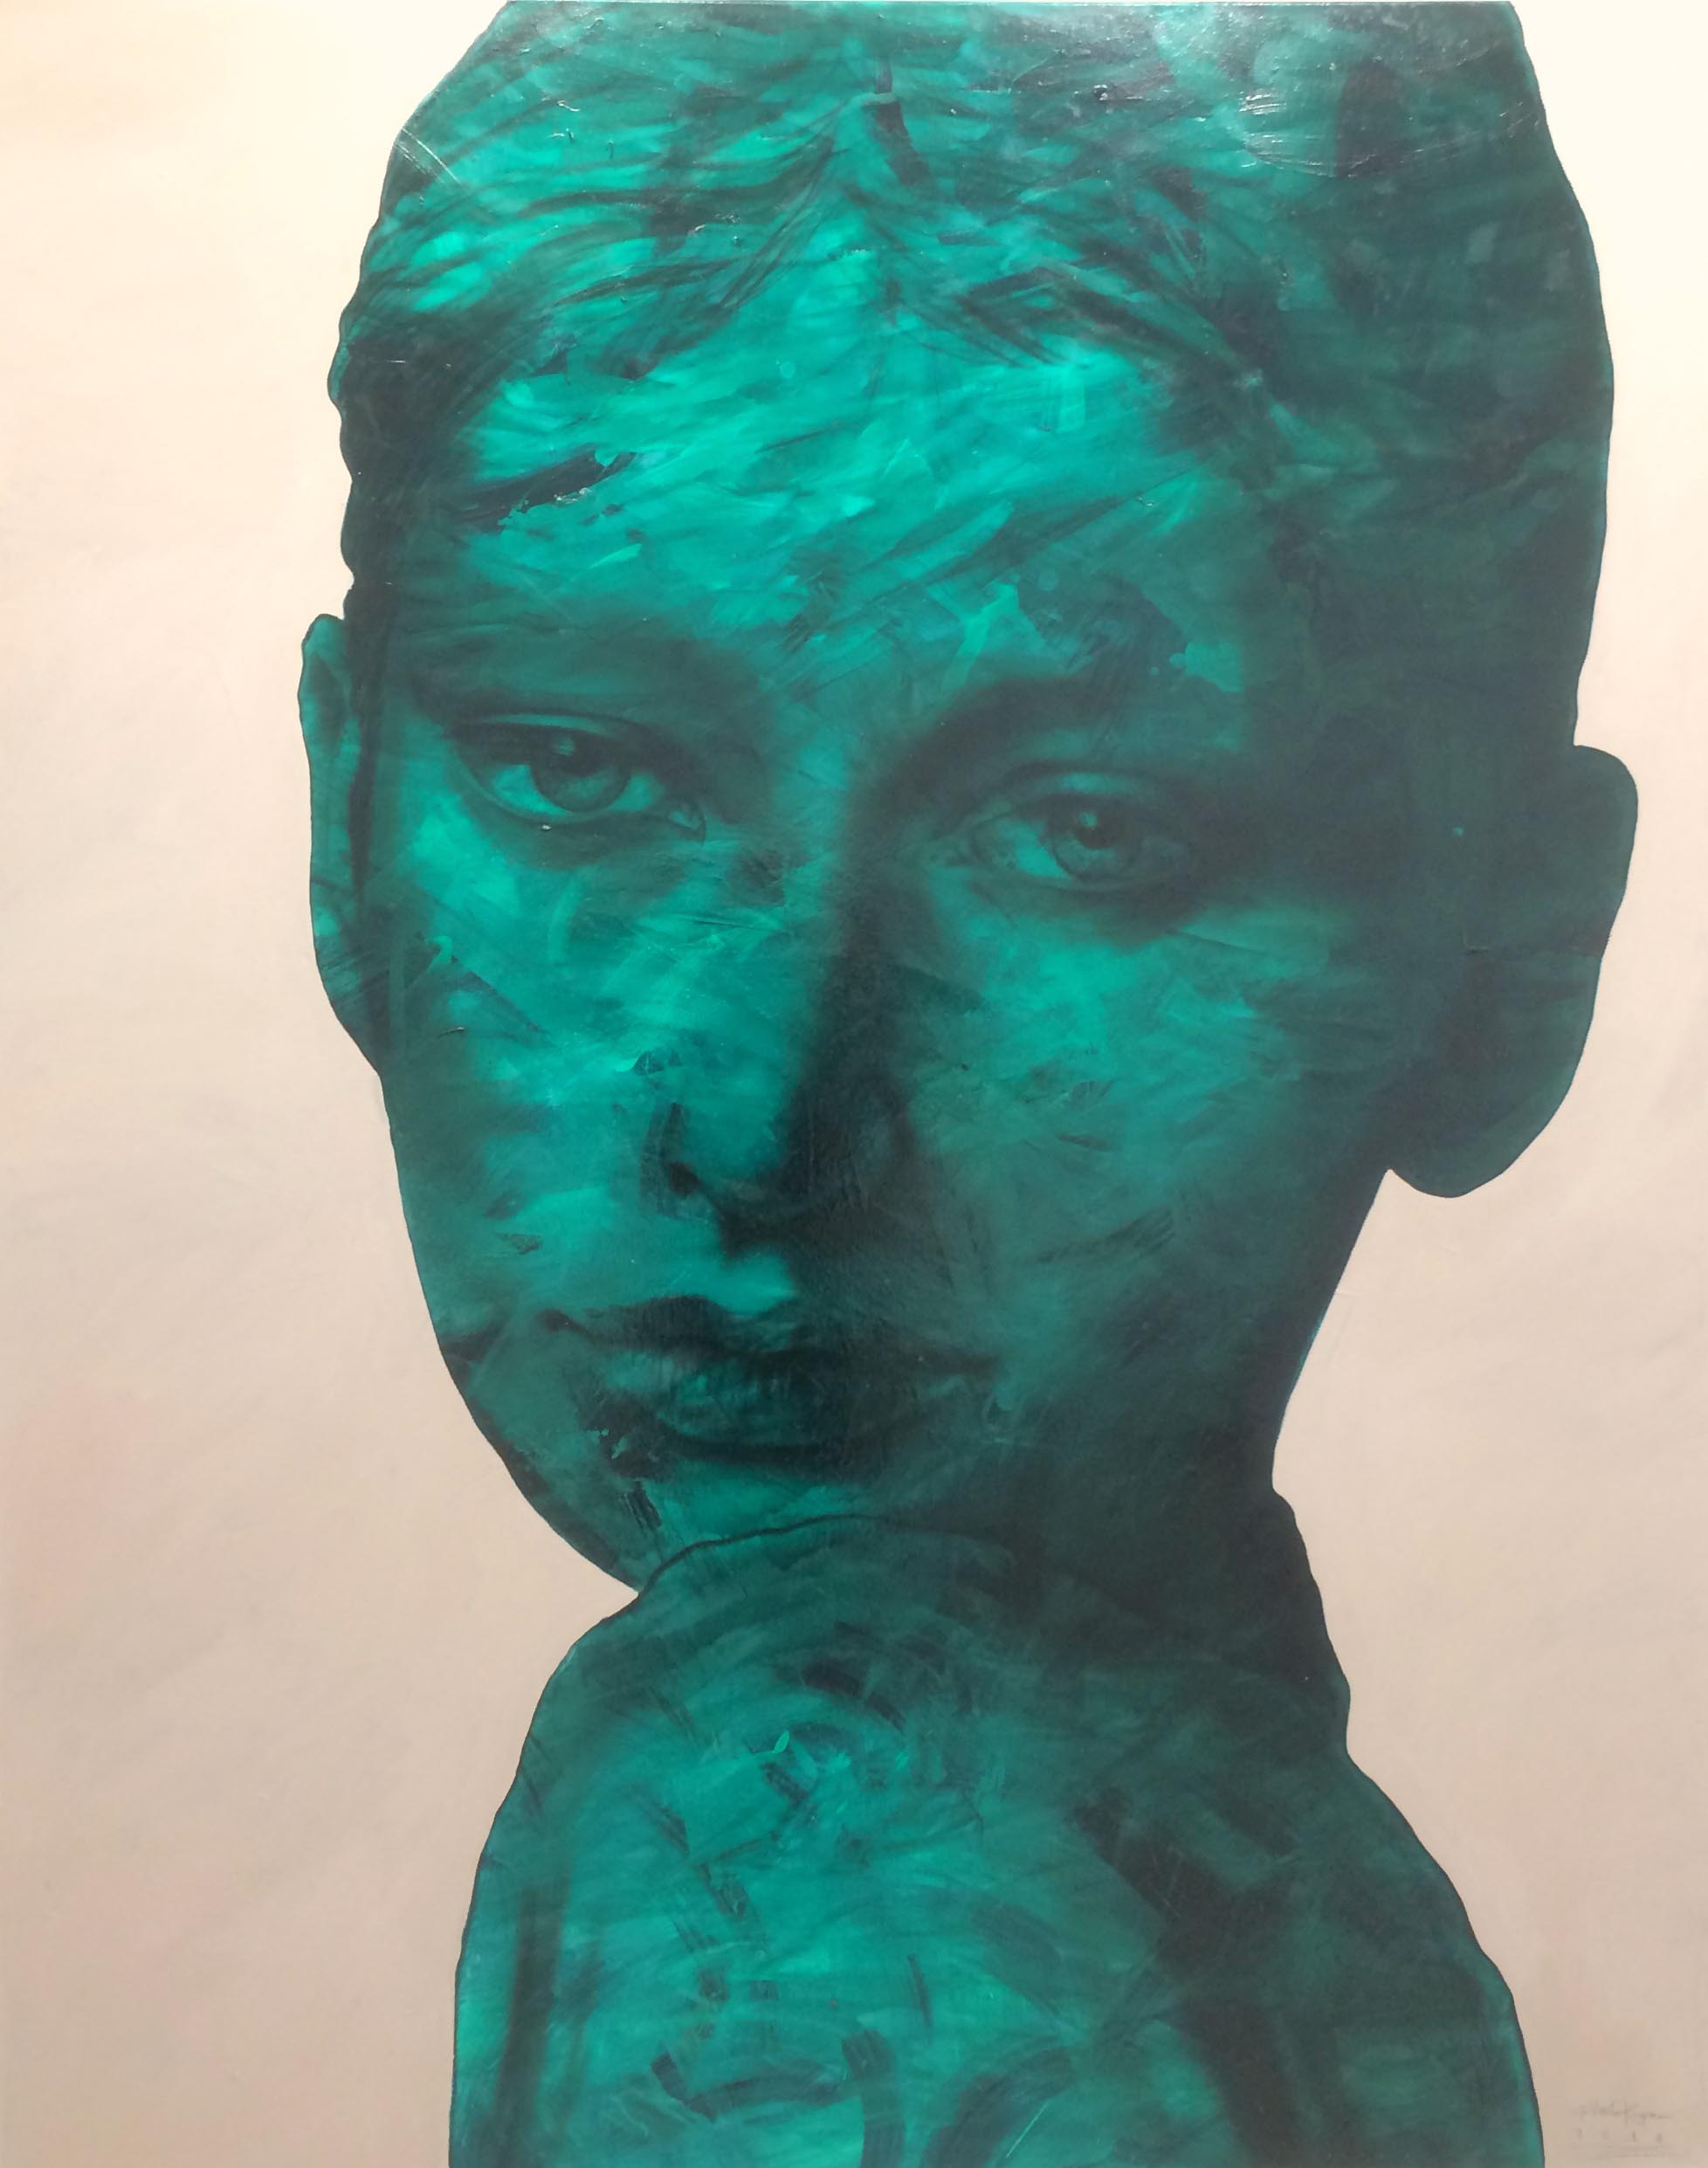 İsimsiz- Untitled, 2016, Tuval üzerine akrilik- Acrylic on canvas, 150x120 cm
